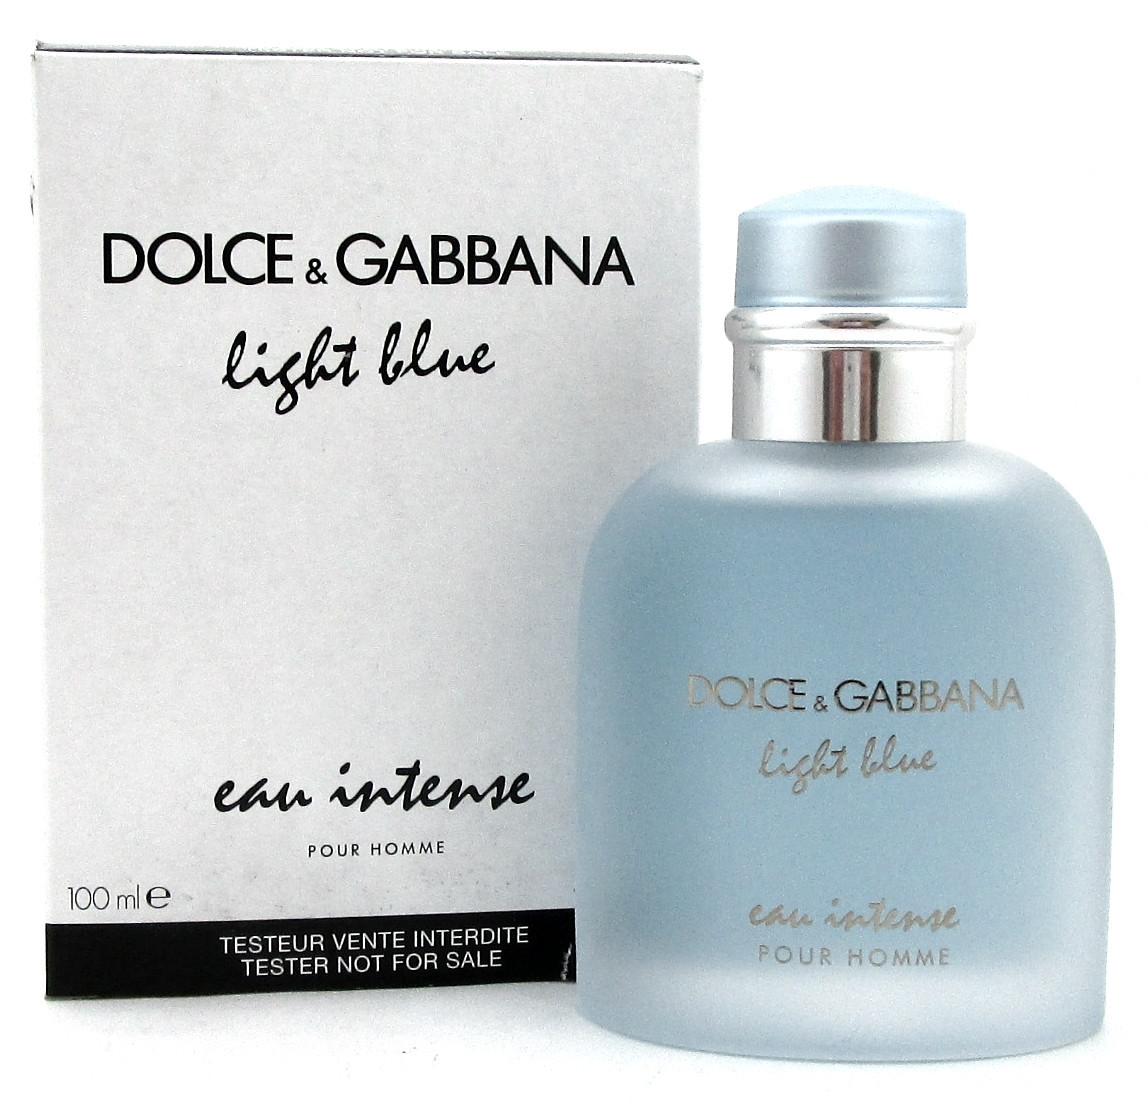 Gabbana intense pour homme. Dolce Gabbana Light Blue intense 100ml. Дольче Габбана Лайт Блю 100 мл. Dolce Gabbana Light Blue 100ml. Dolce & Gabbana Light Blue (тестер Дольче Габбана) - 100 мл..